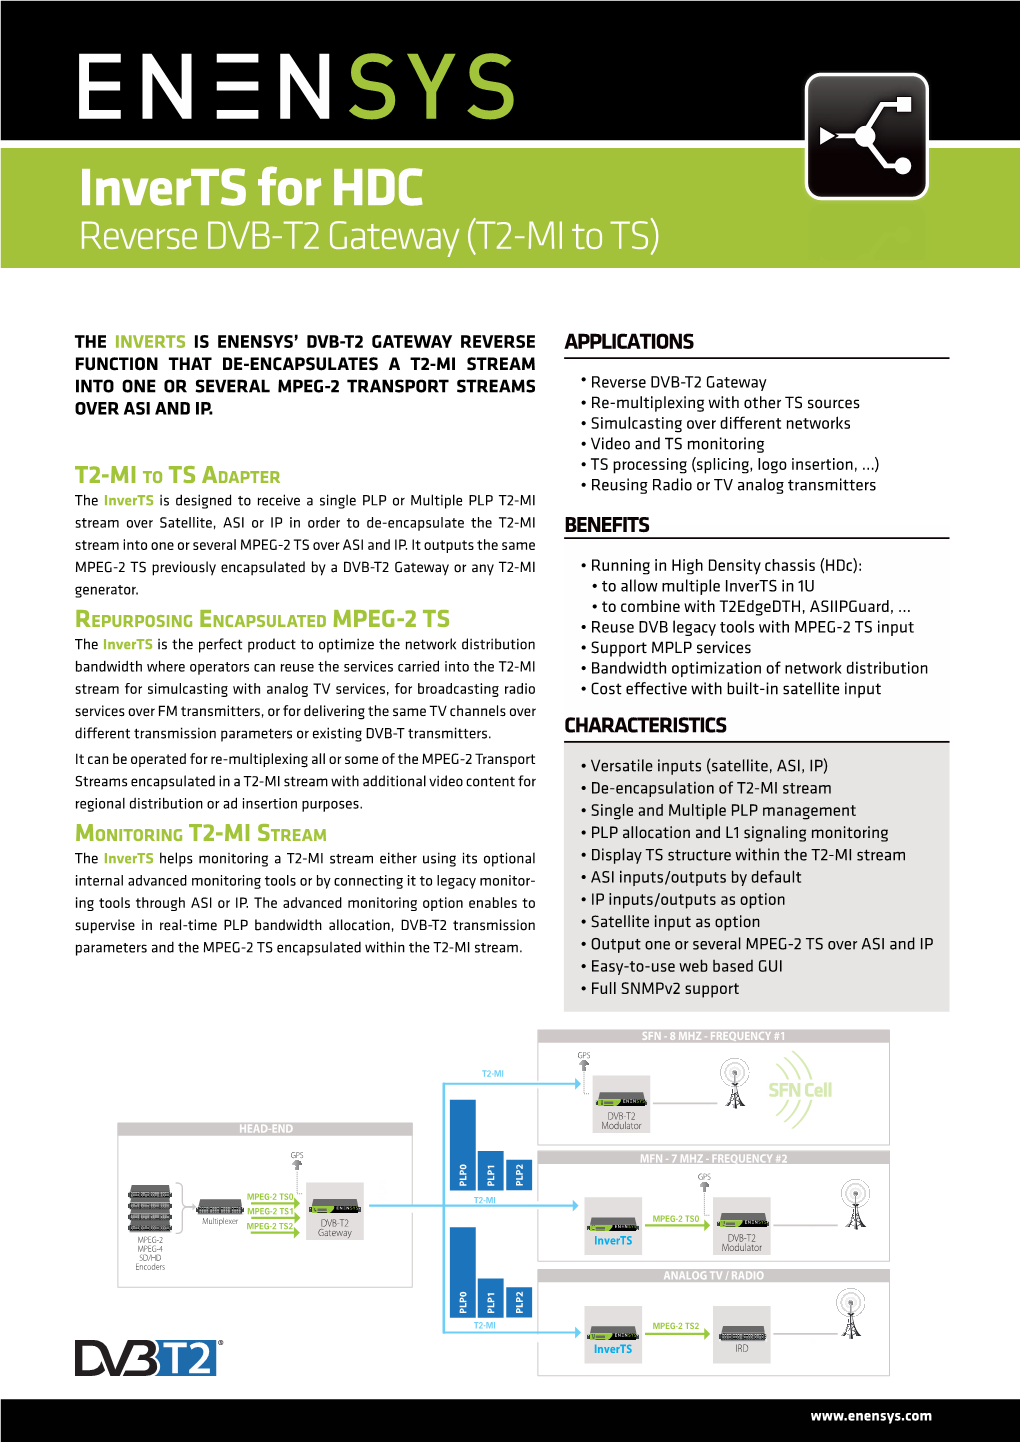 Inverts for HDC Reverse DVB-T2 Gateway (T2-MI to TS)